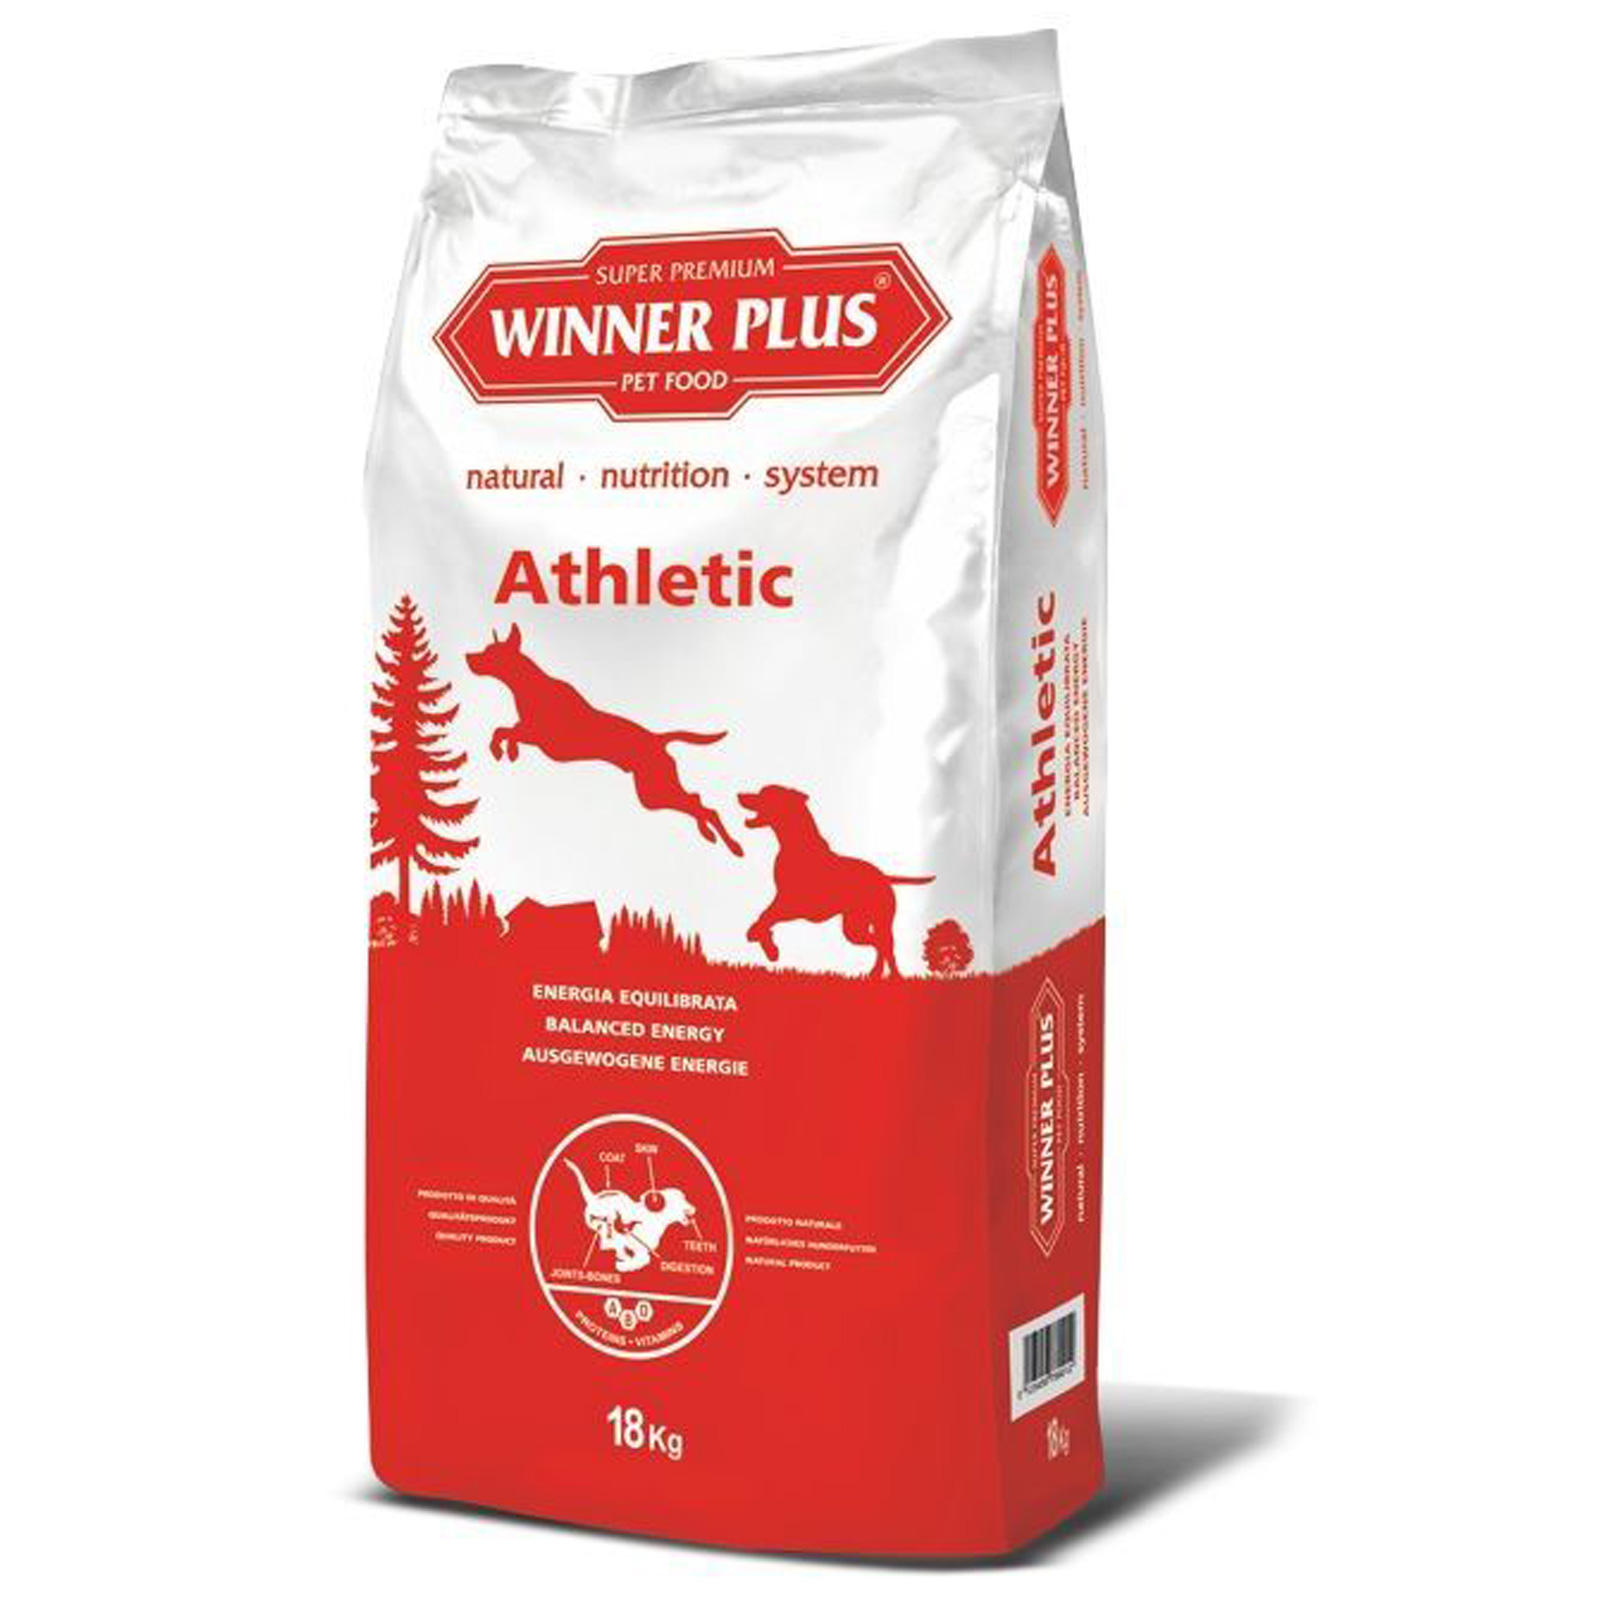 Winner Plus Professional Premium Athletic kutyaeledel 18 kg